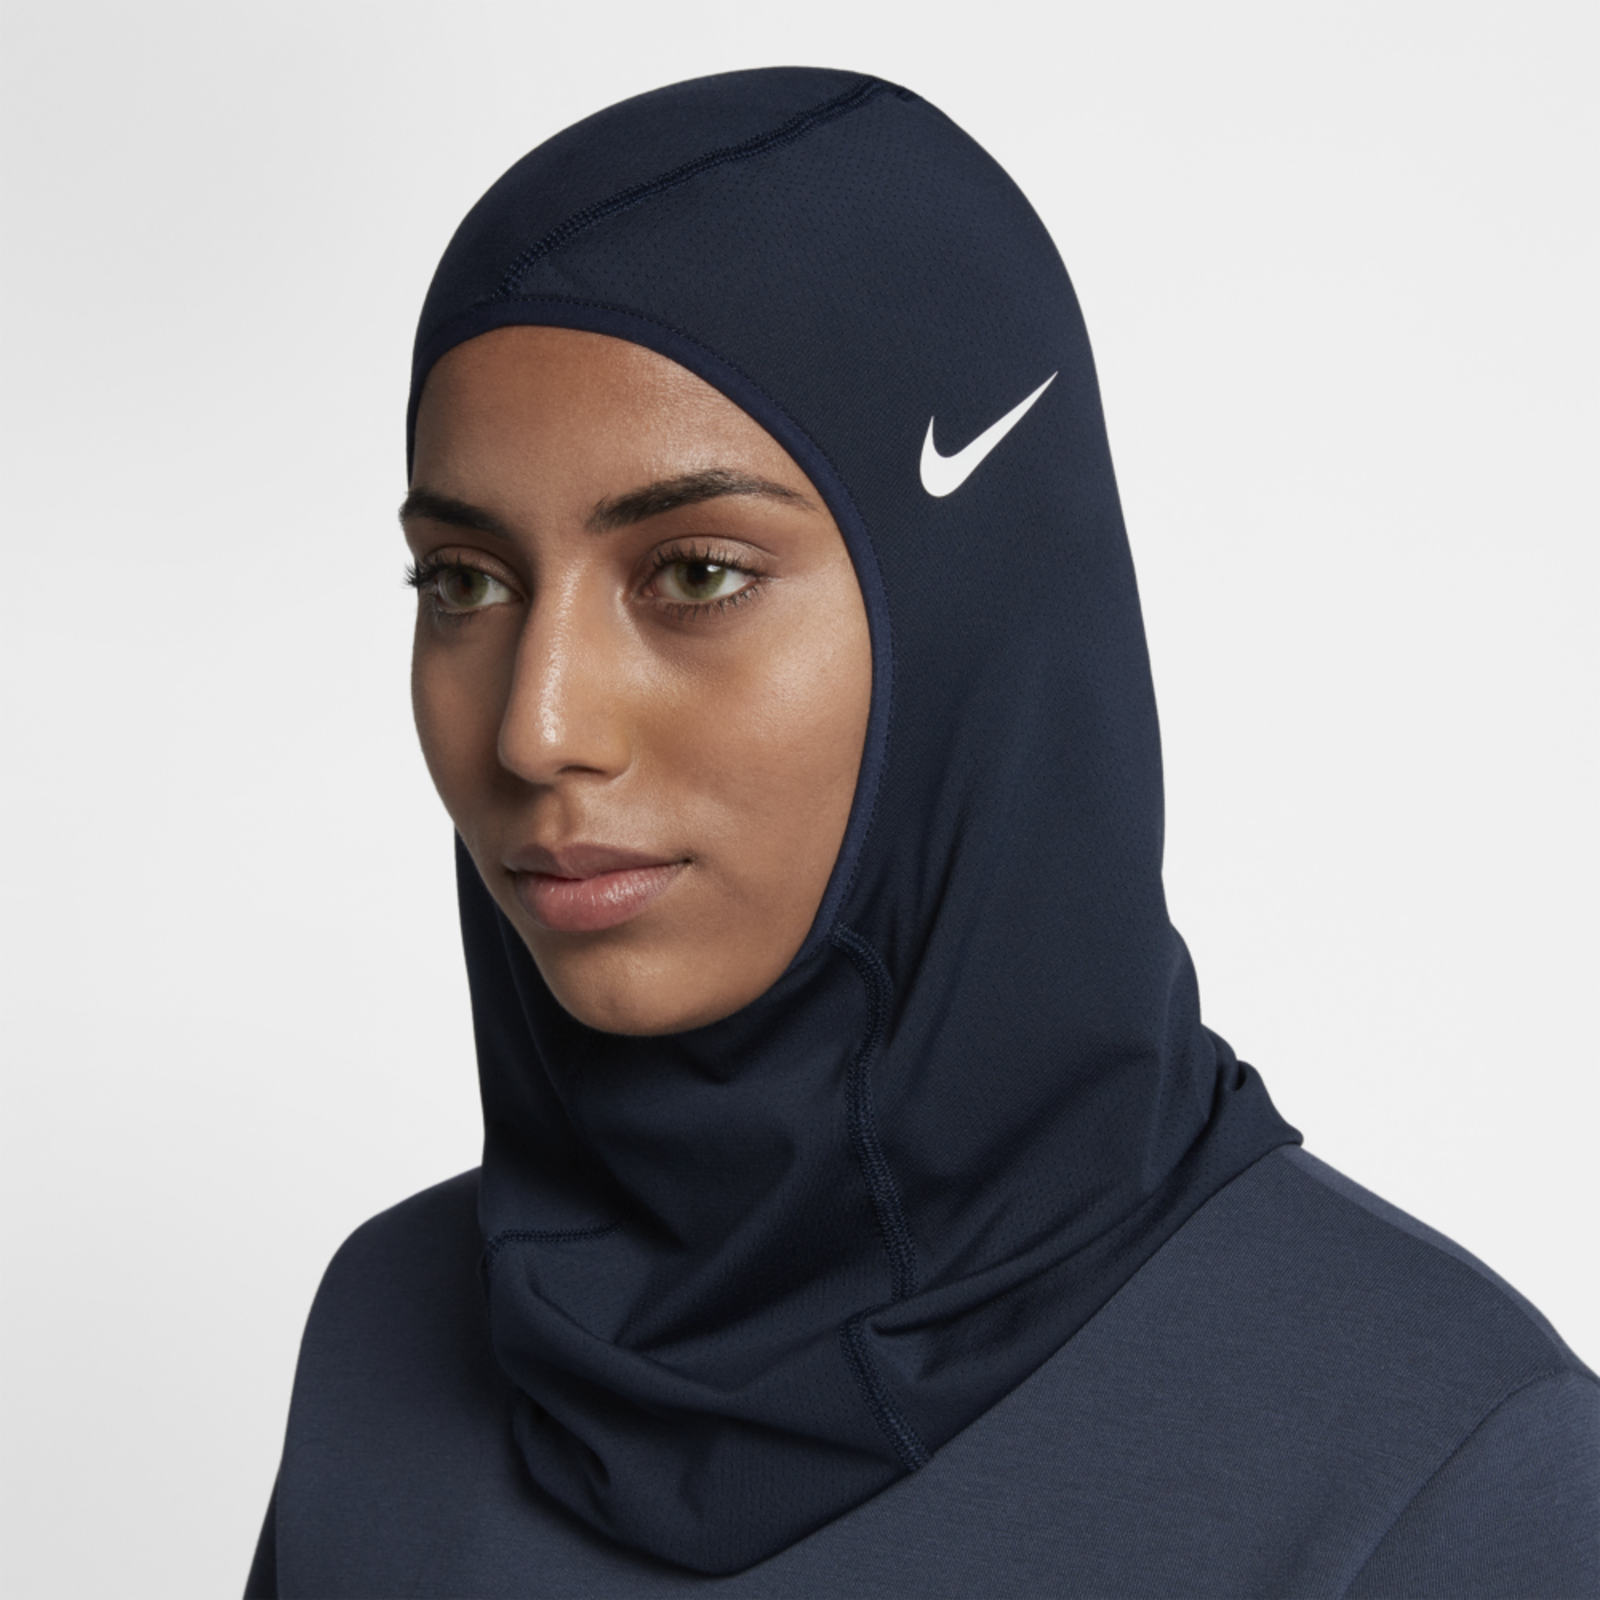 Nike Unveils Performance Hijab For Muslim Women 